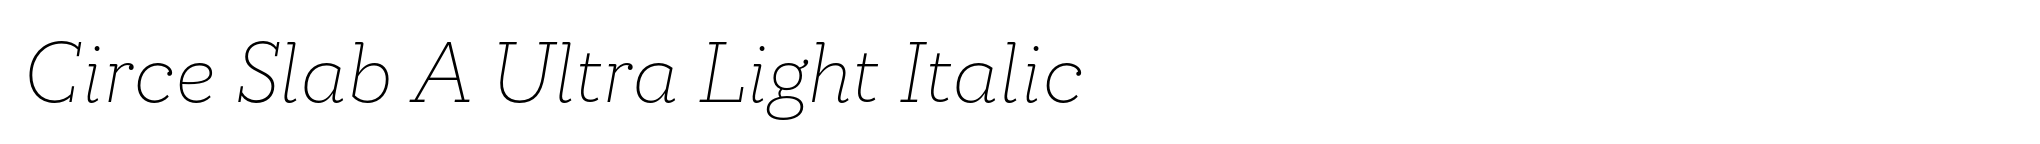 Circe Slab A Ultra Light Italic image